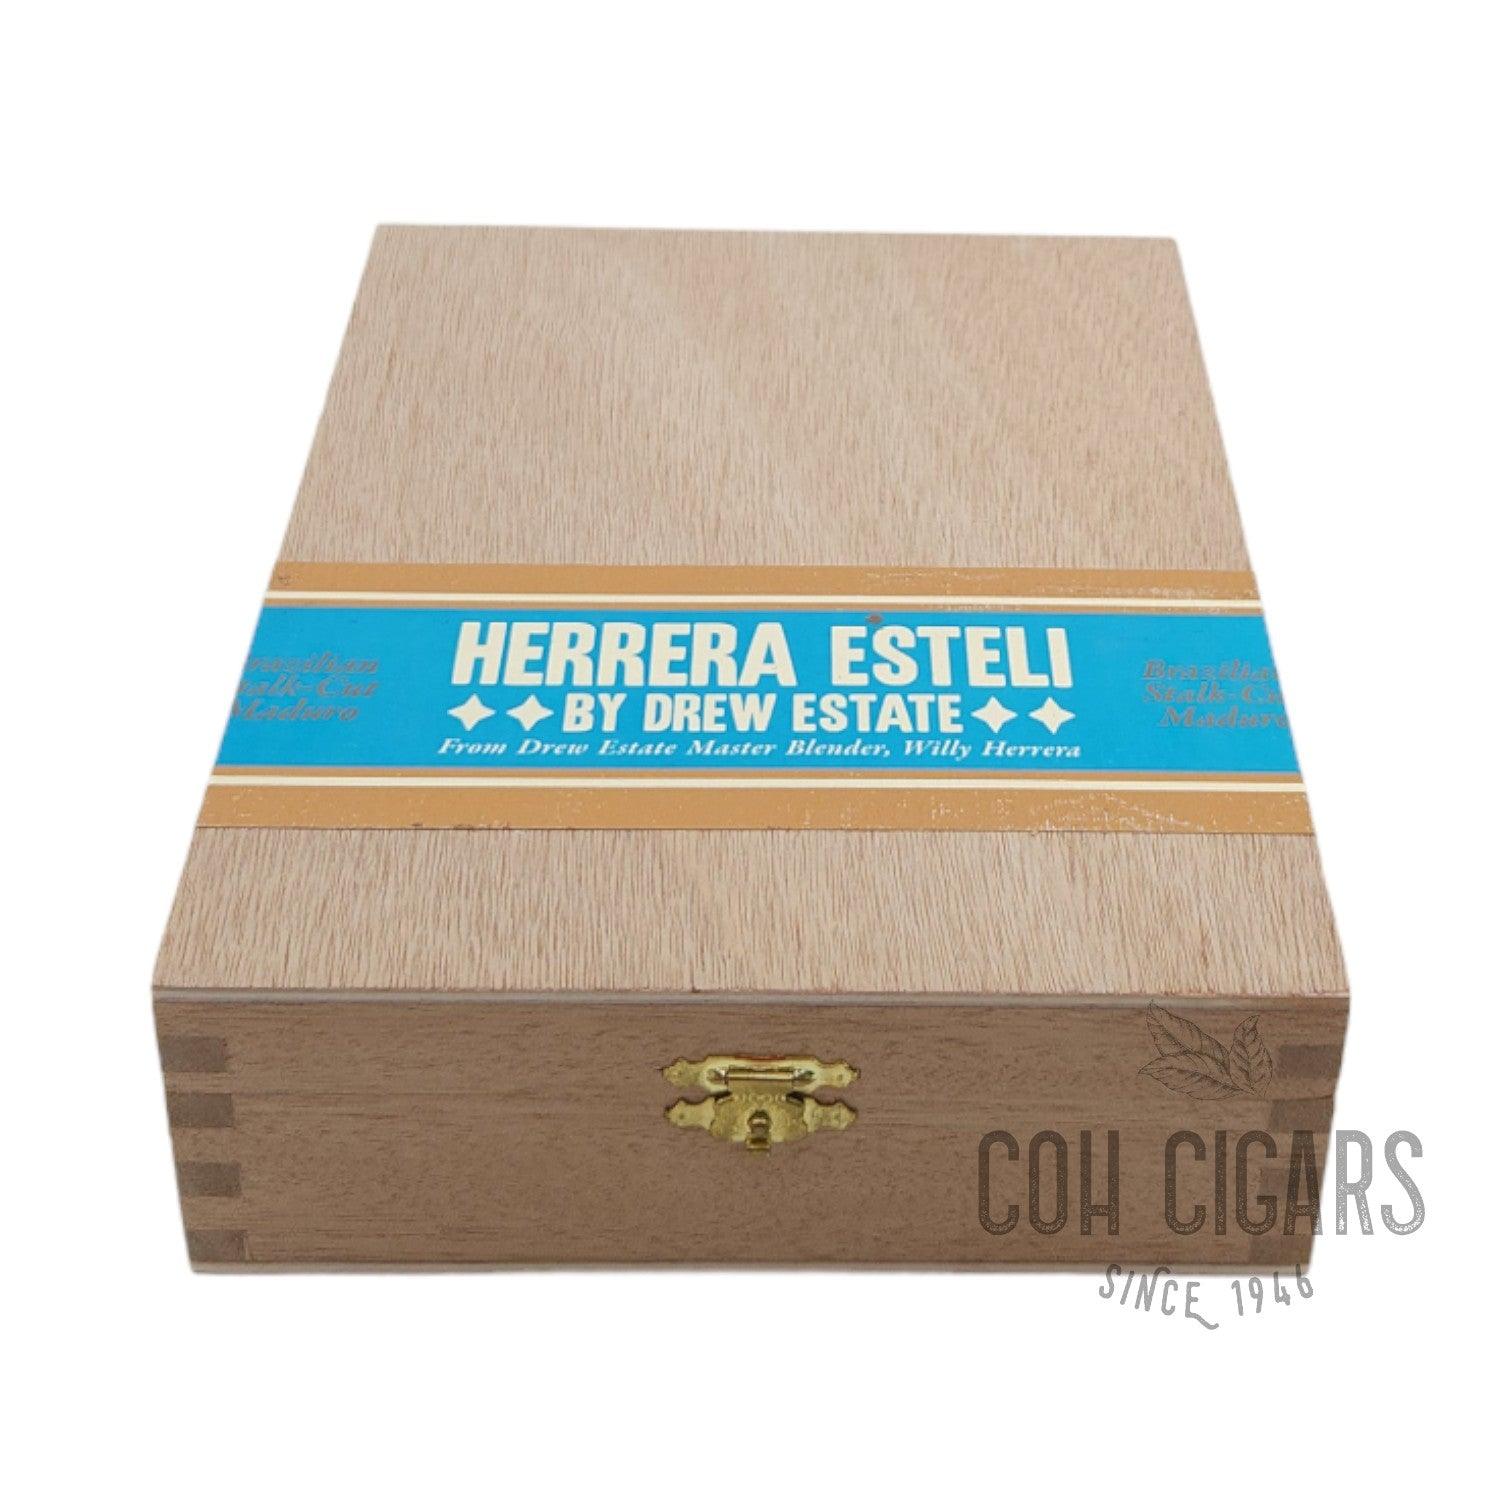 Drew Estate Cigar | Herrera Esteli Maduro Lonsdale Deluxe | Box 12 - HK CohCigars